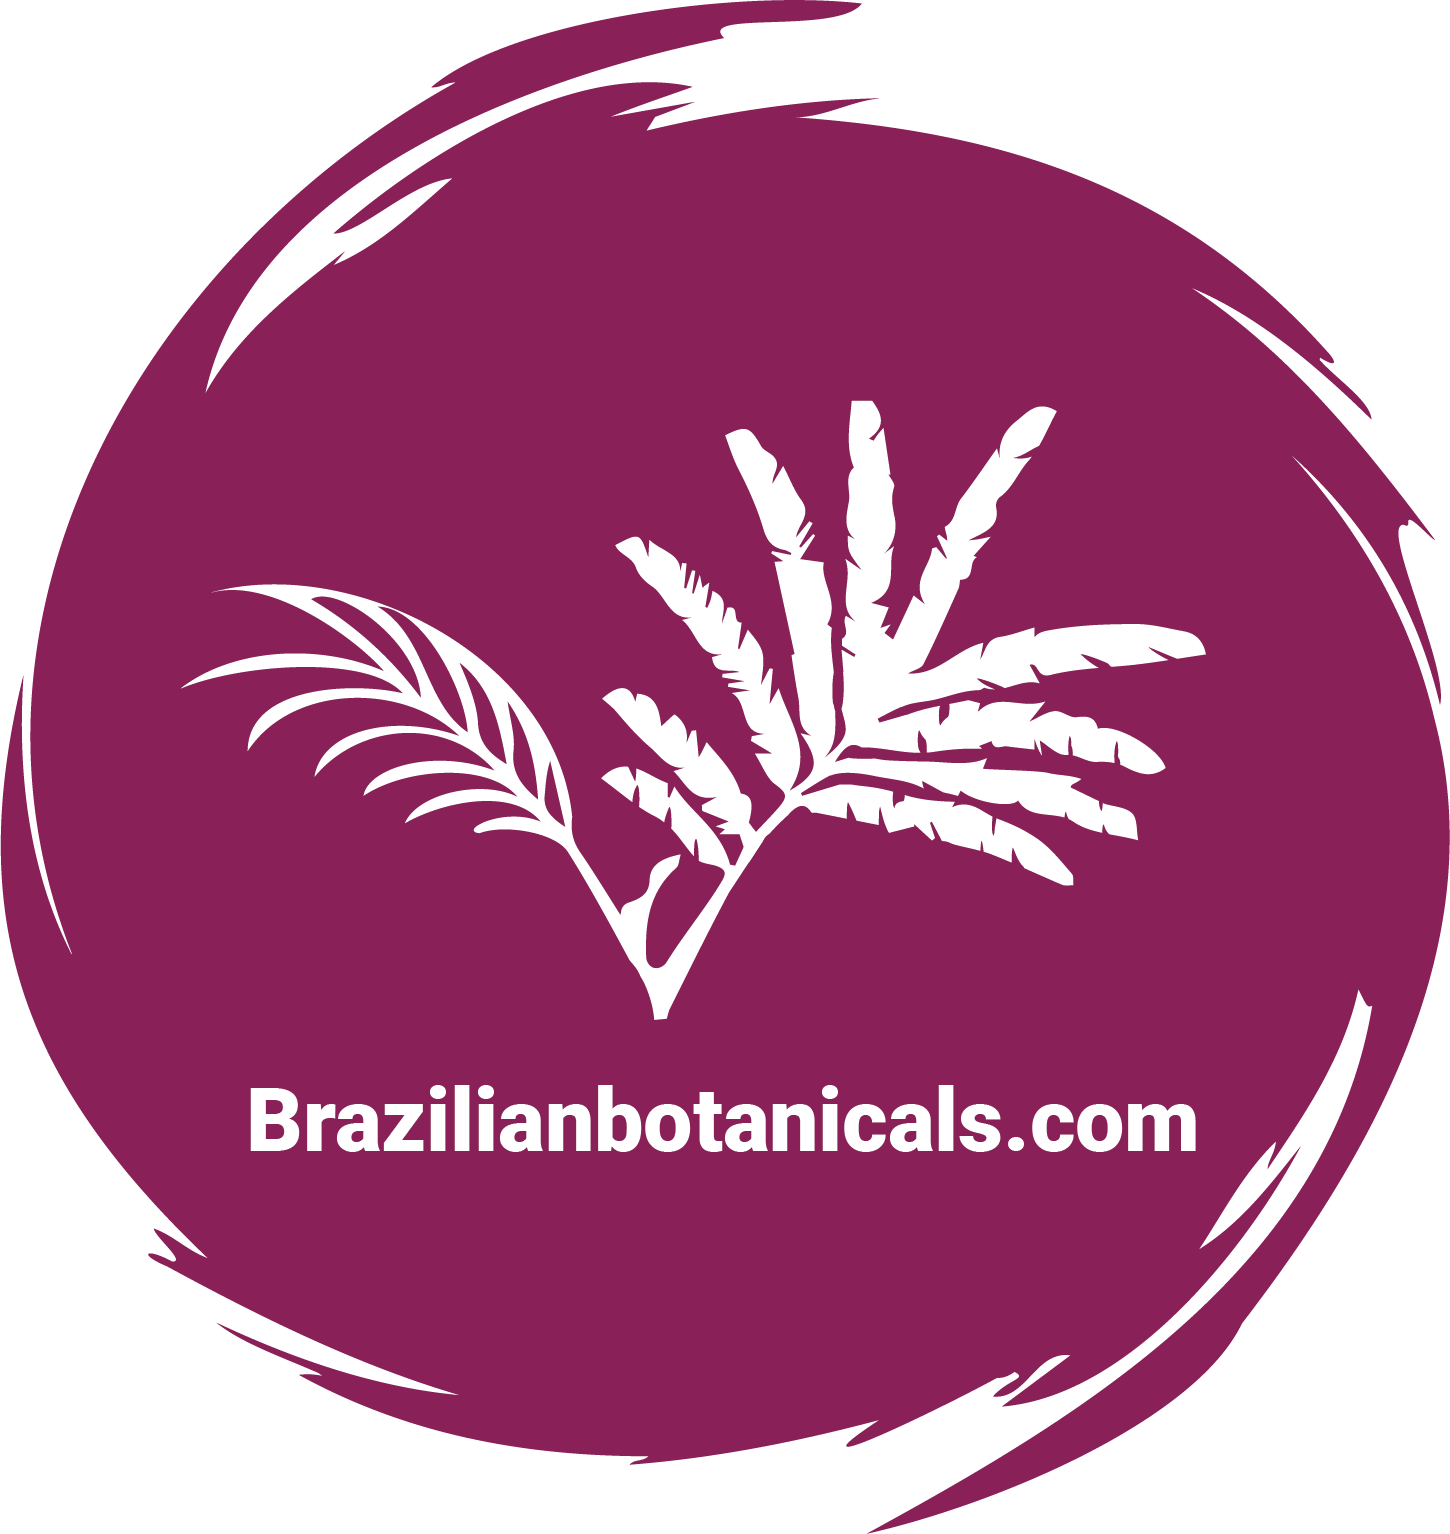 Brazilianbotanicals.com